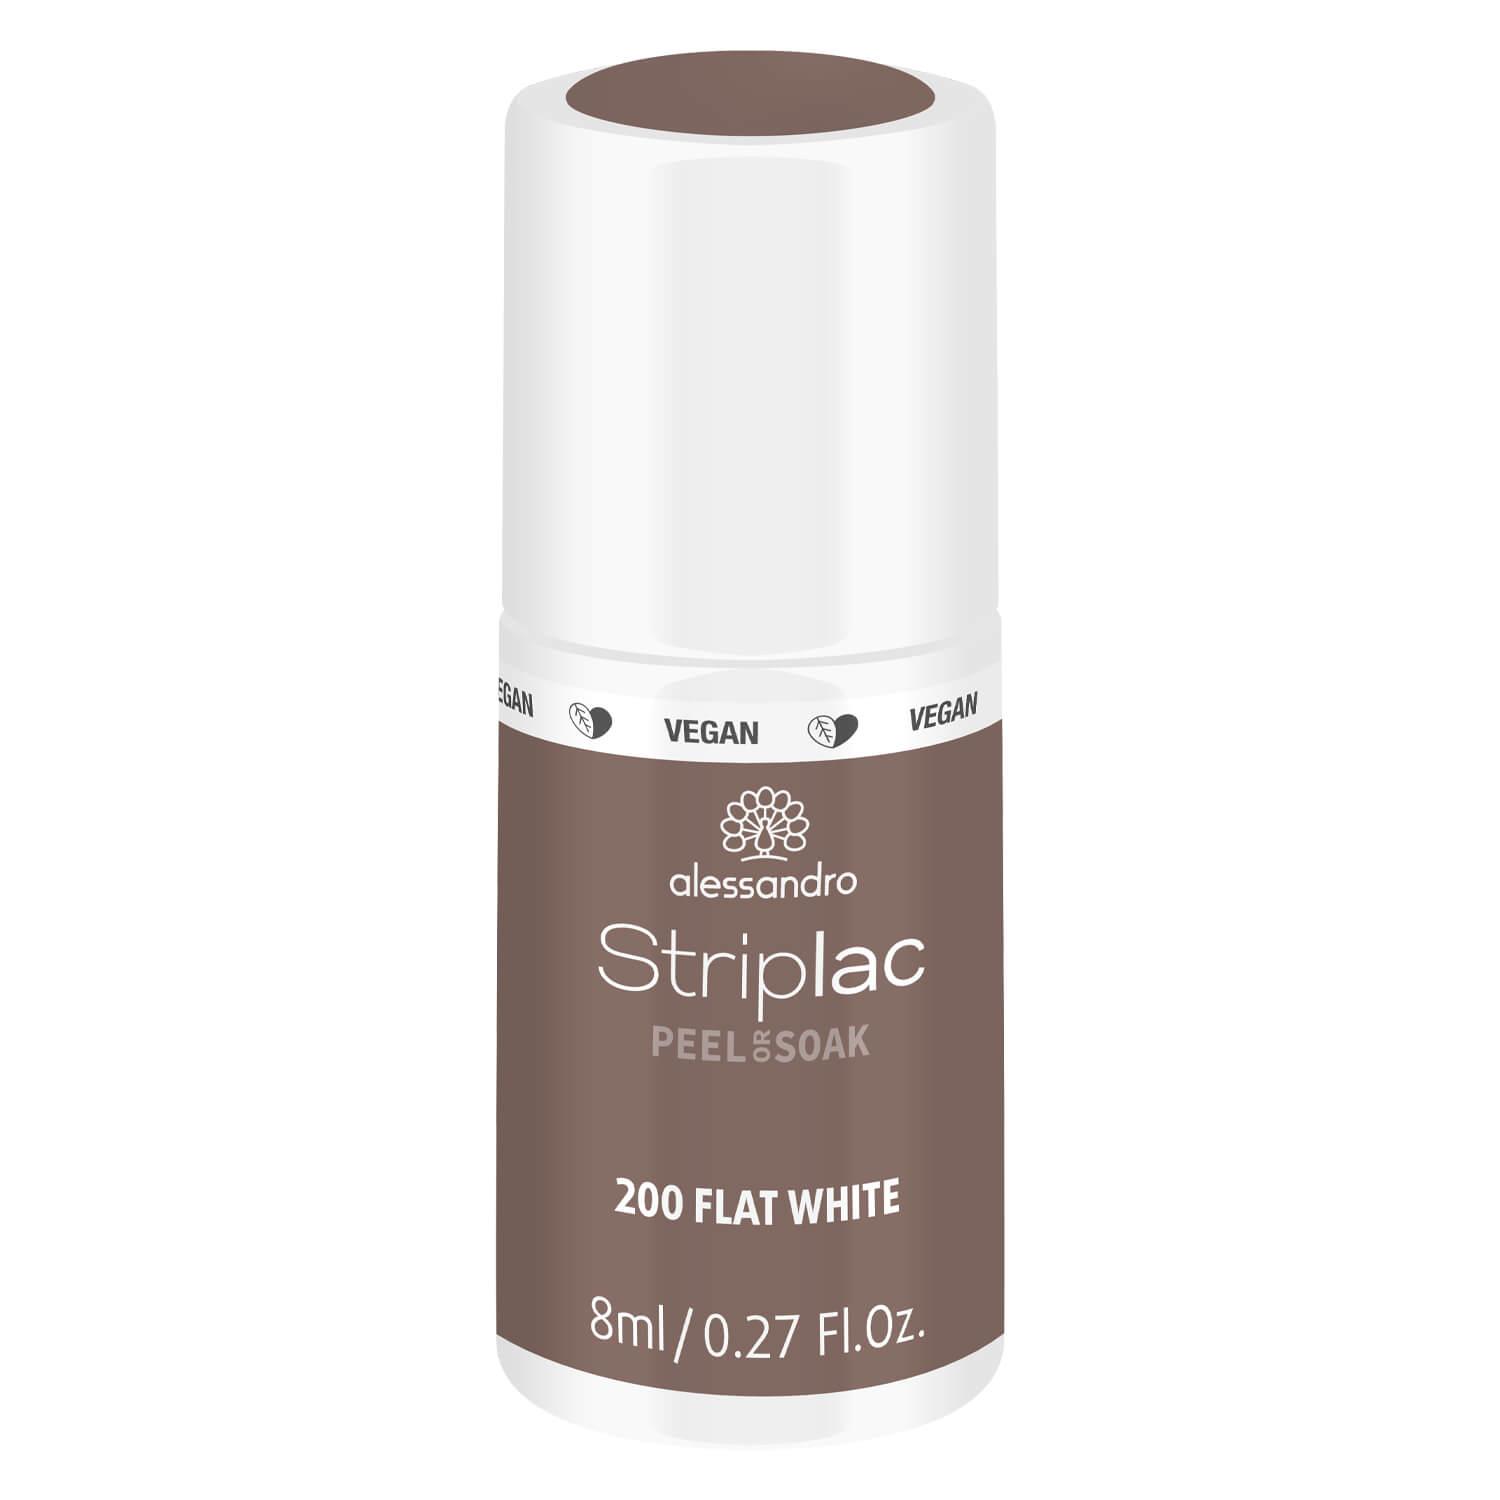 Striplac Peel or Soak - 200 Flat White